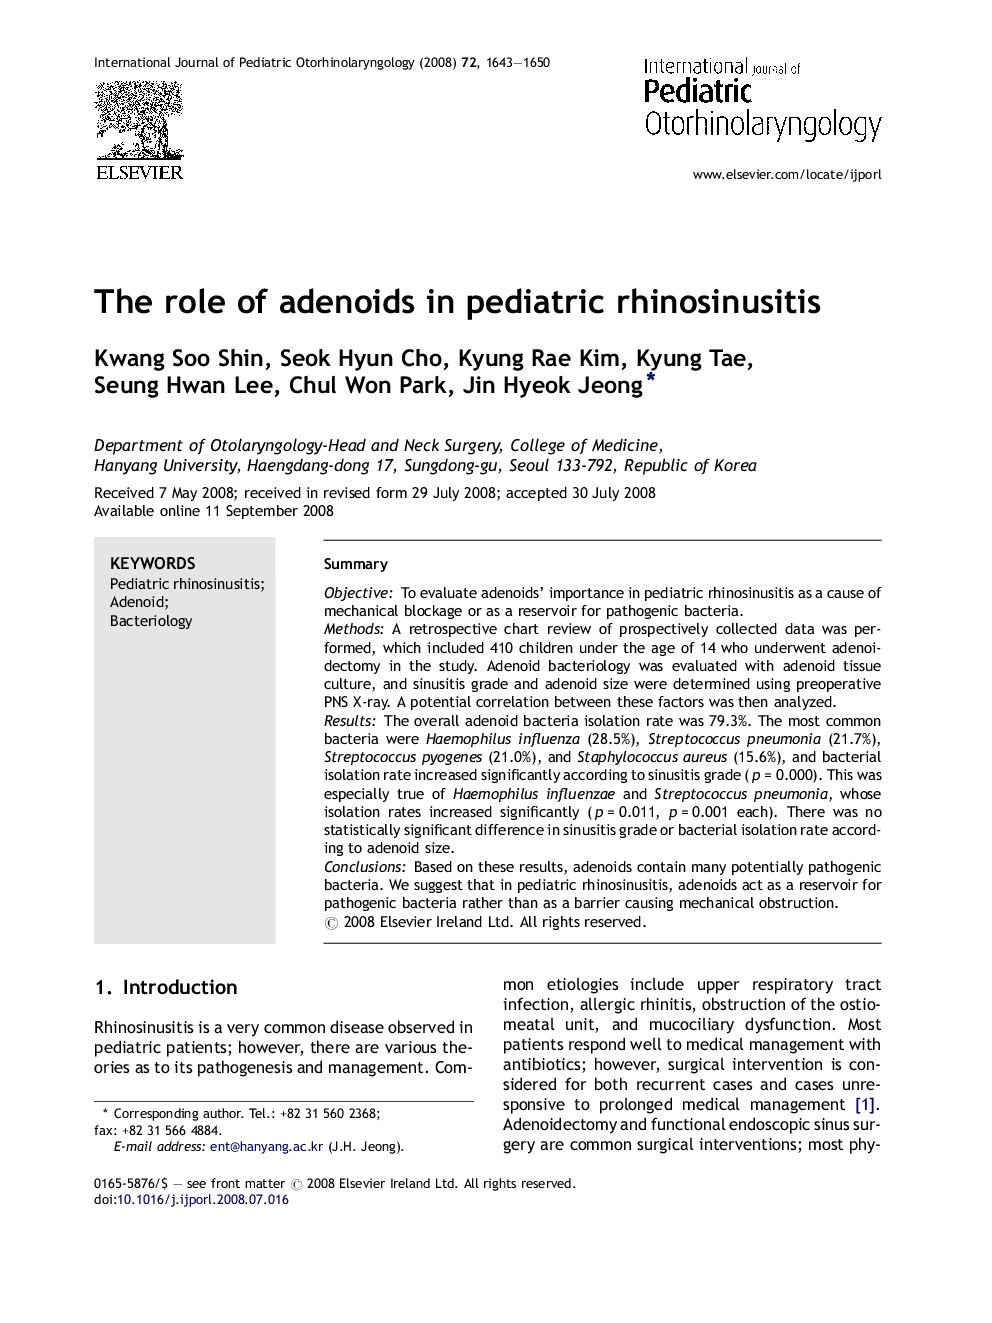 The role of adenoids in pediatric rhinosinusitis